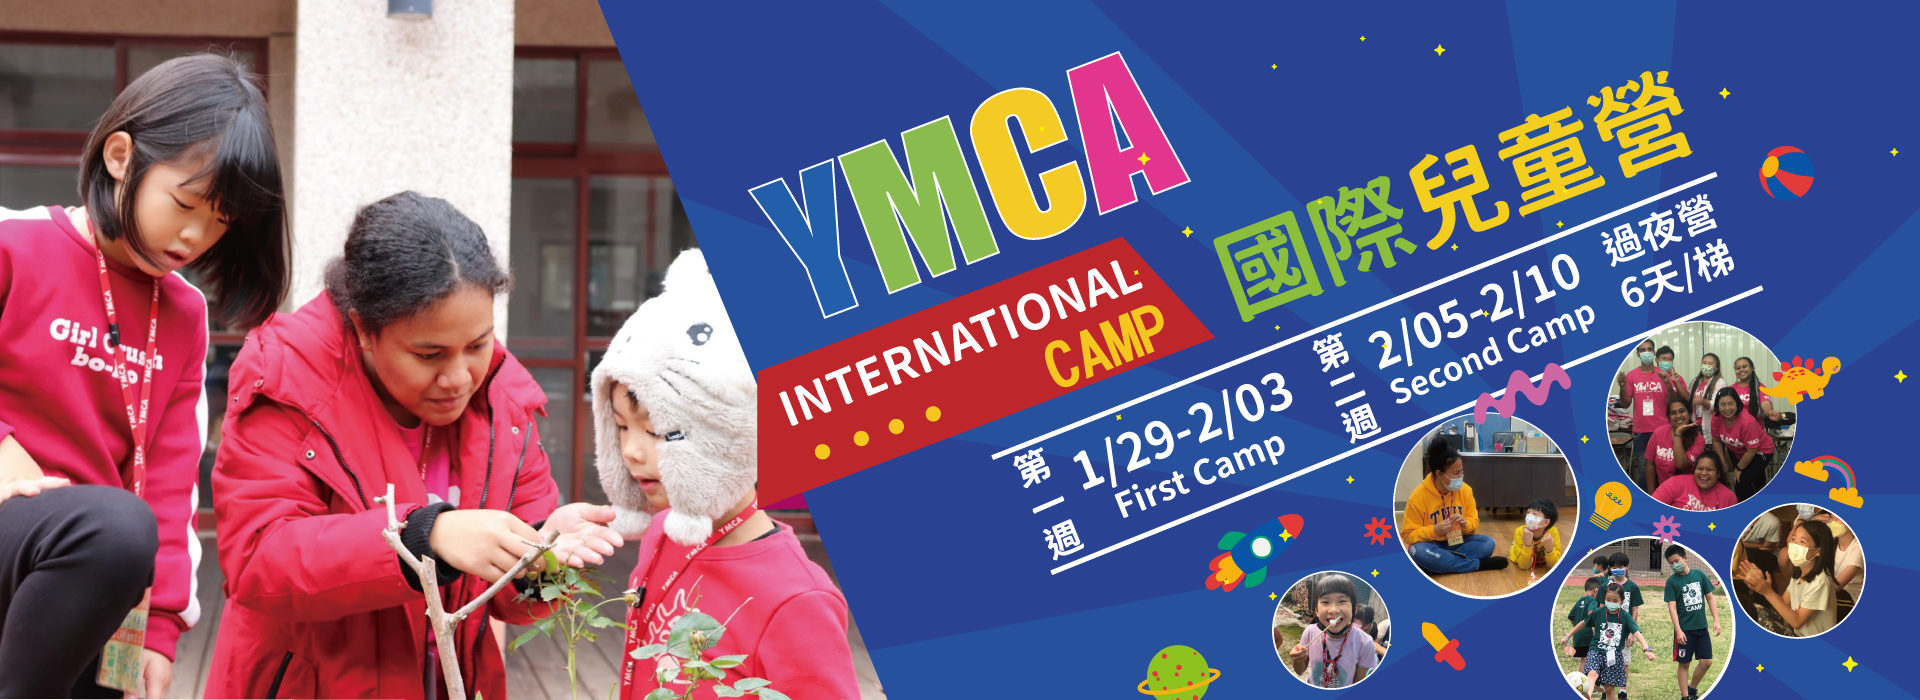 YMCA SUMMER CAMP